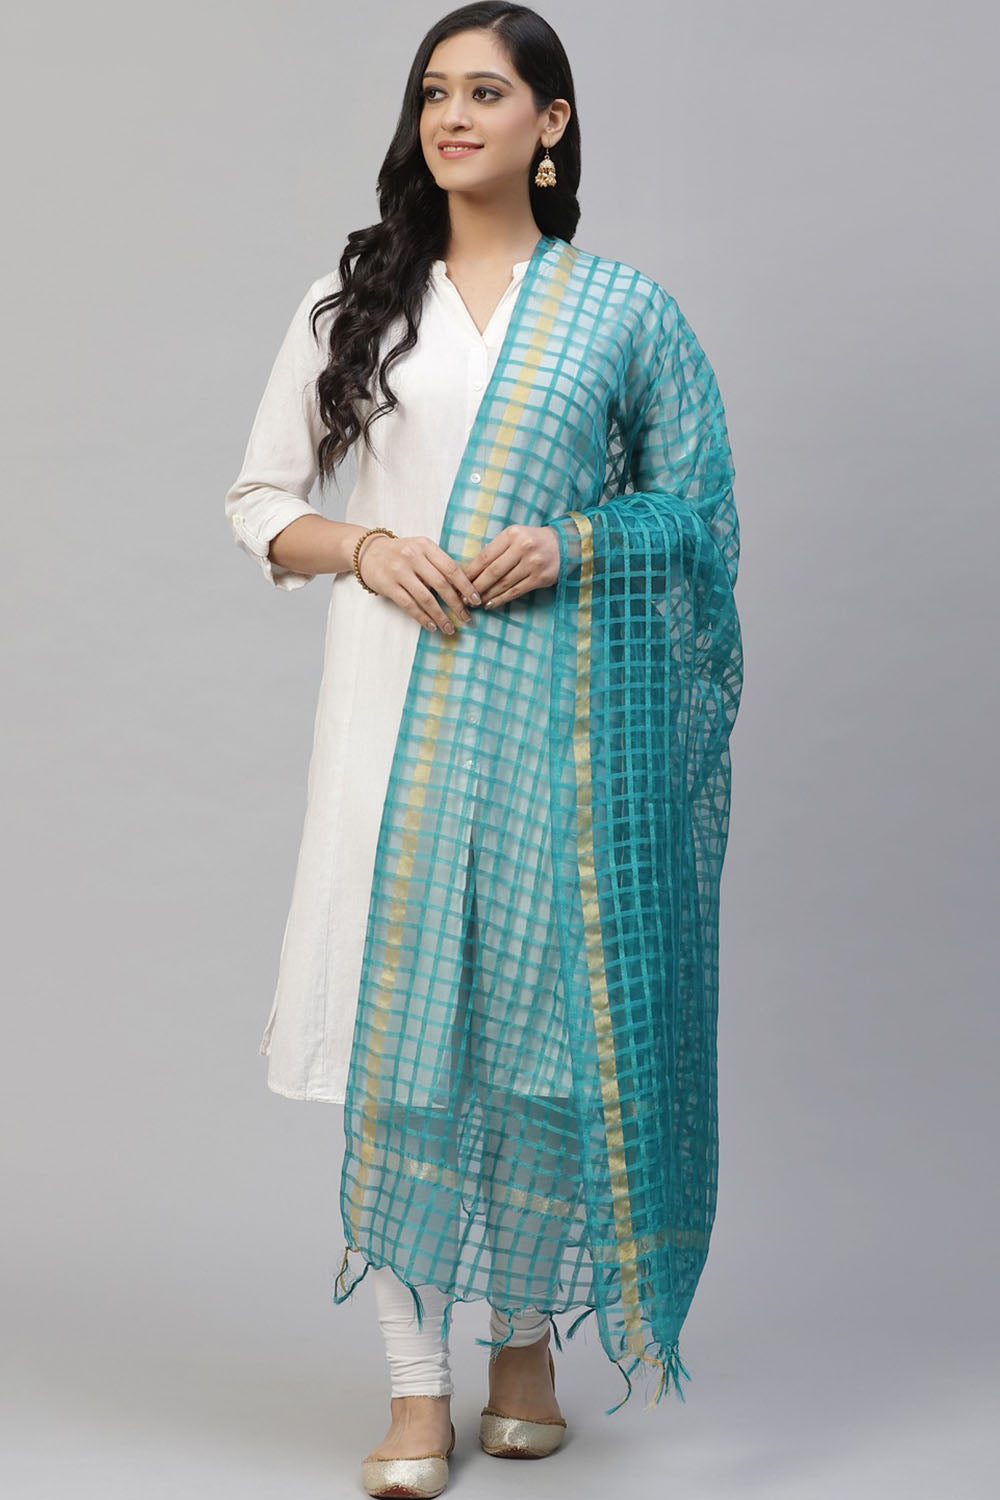 Buy Art Silk Woven Design Dupatta in Blue